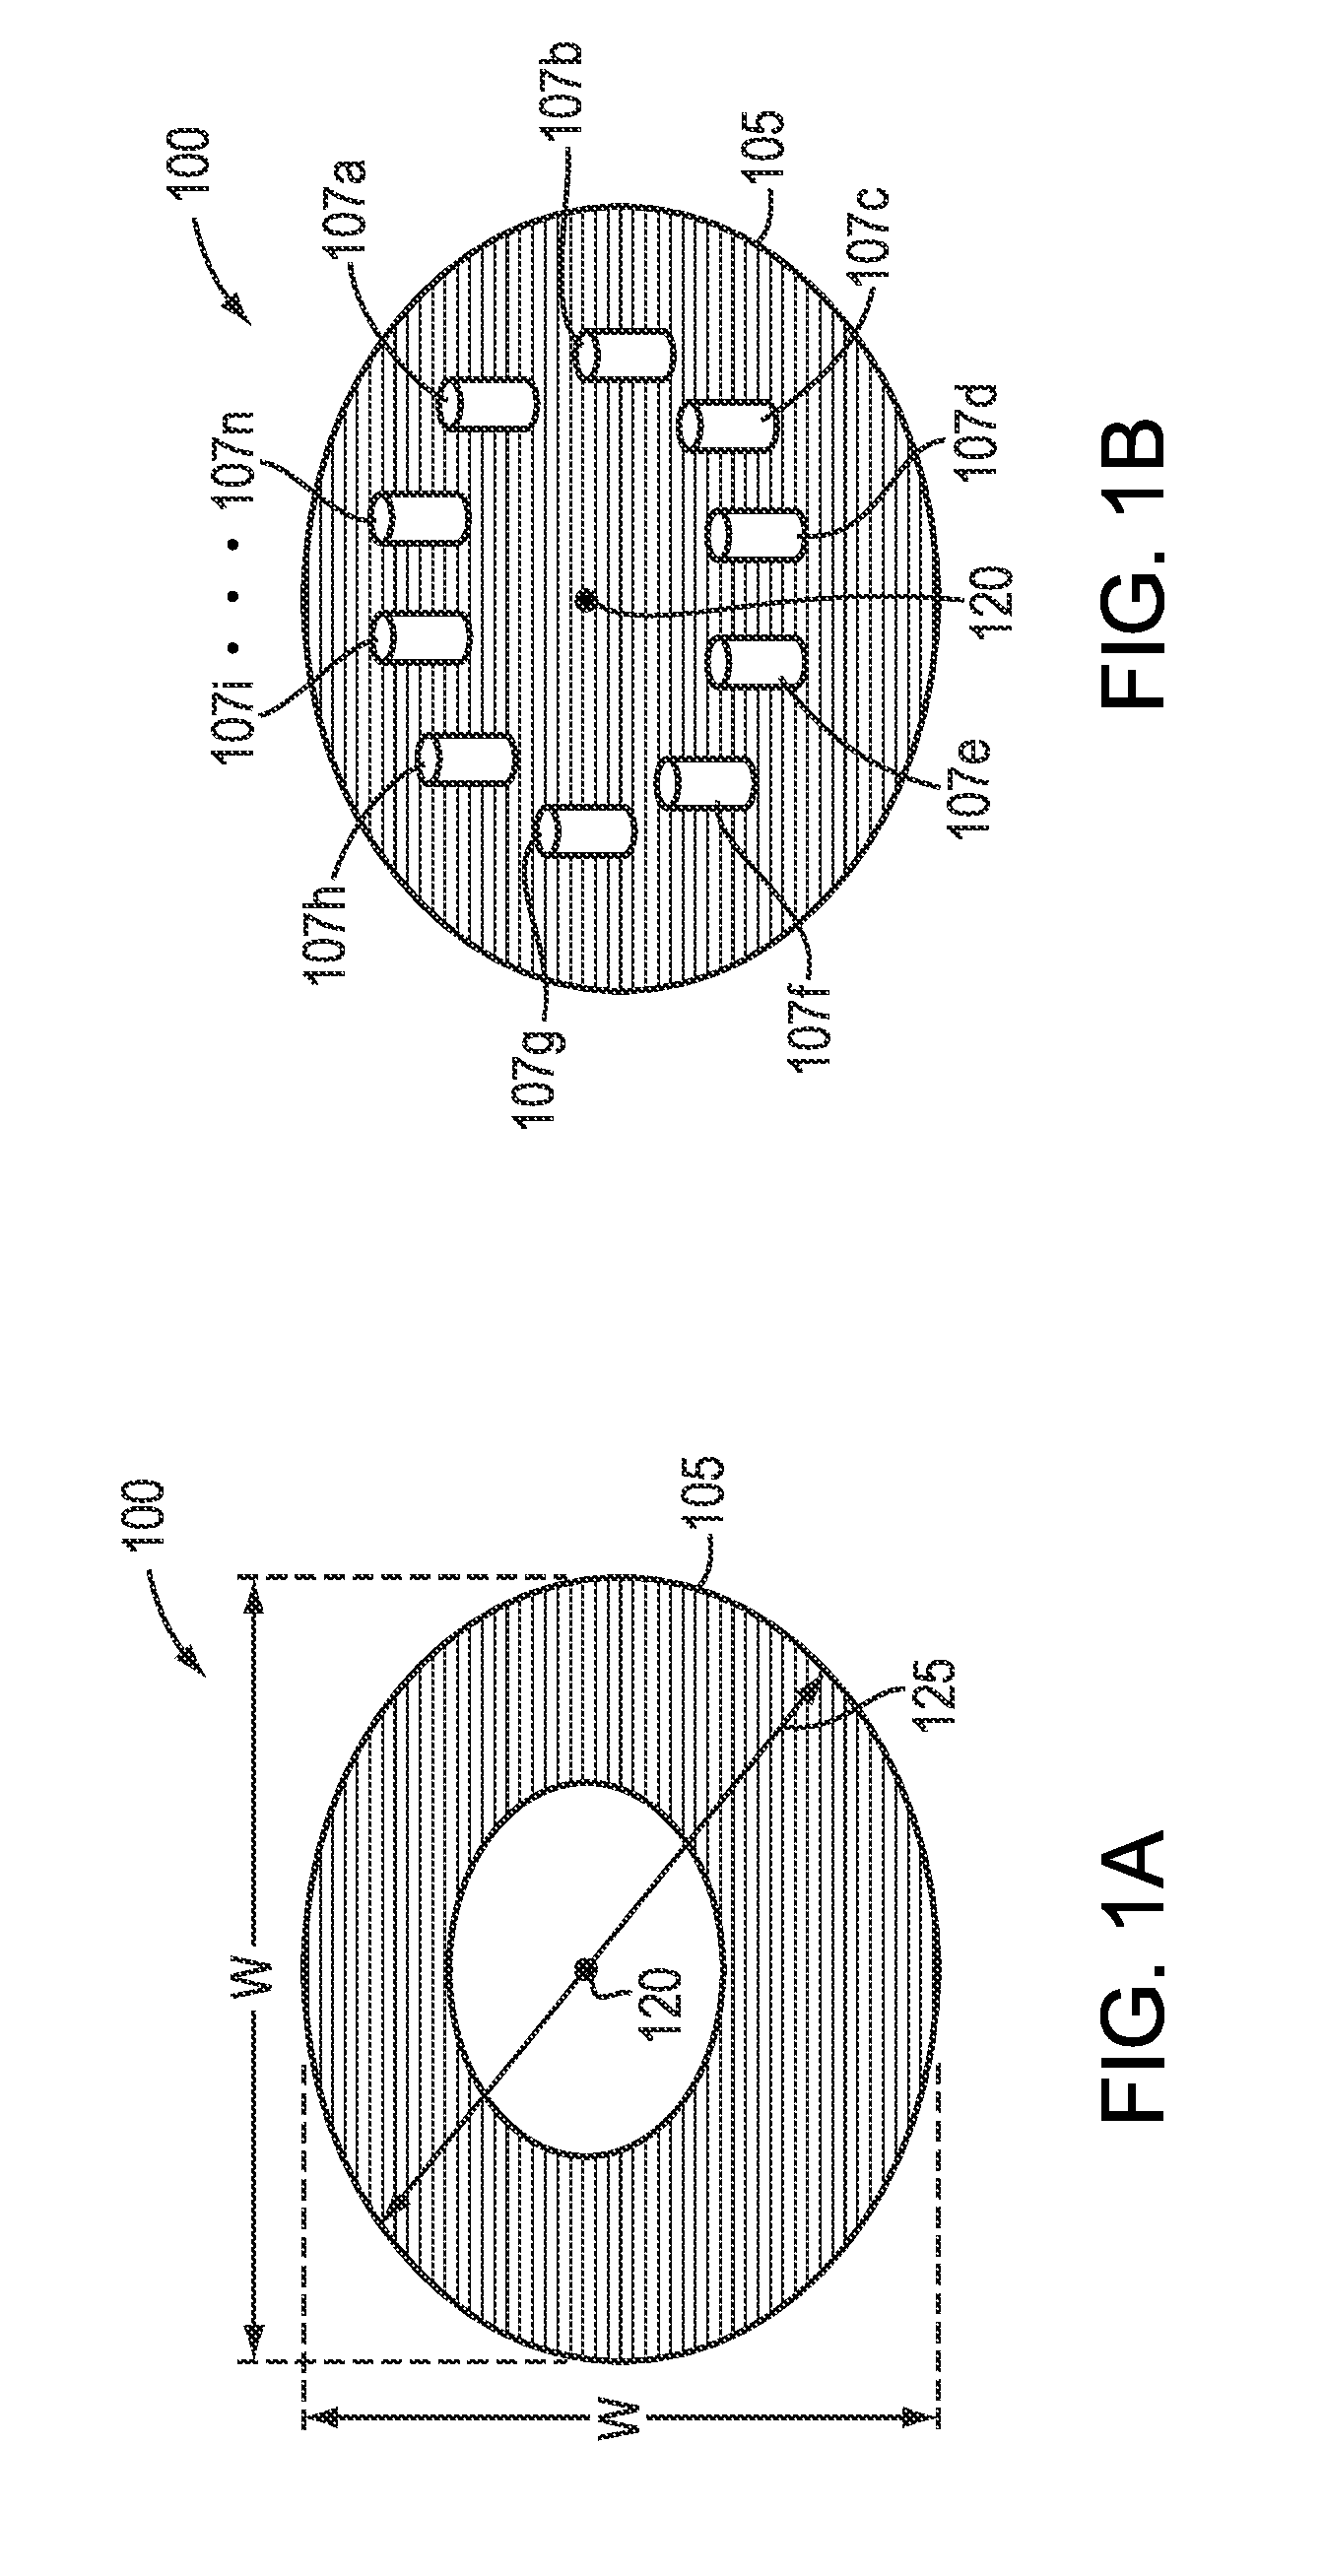 Low-profile multiple-beam lens antenna